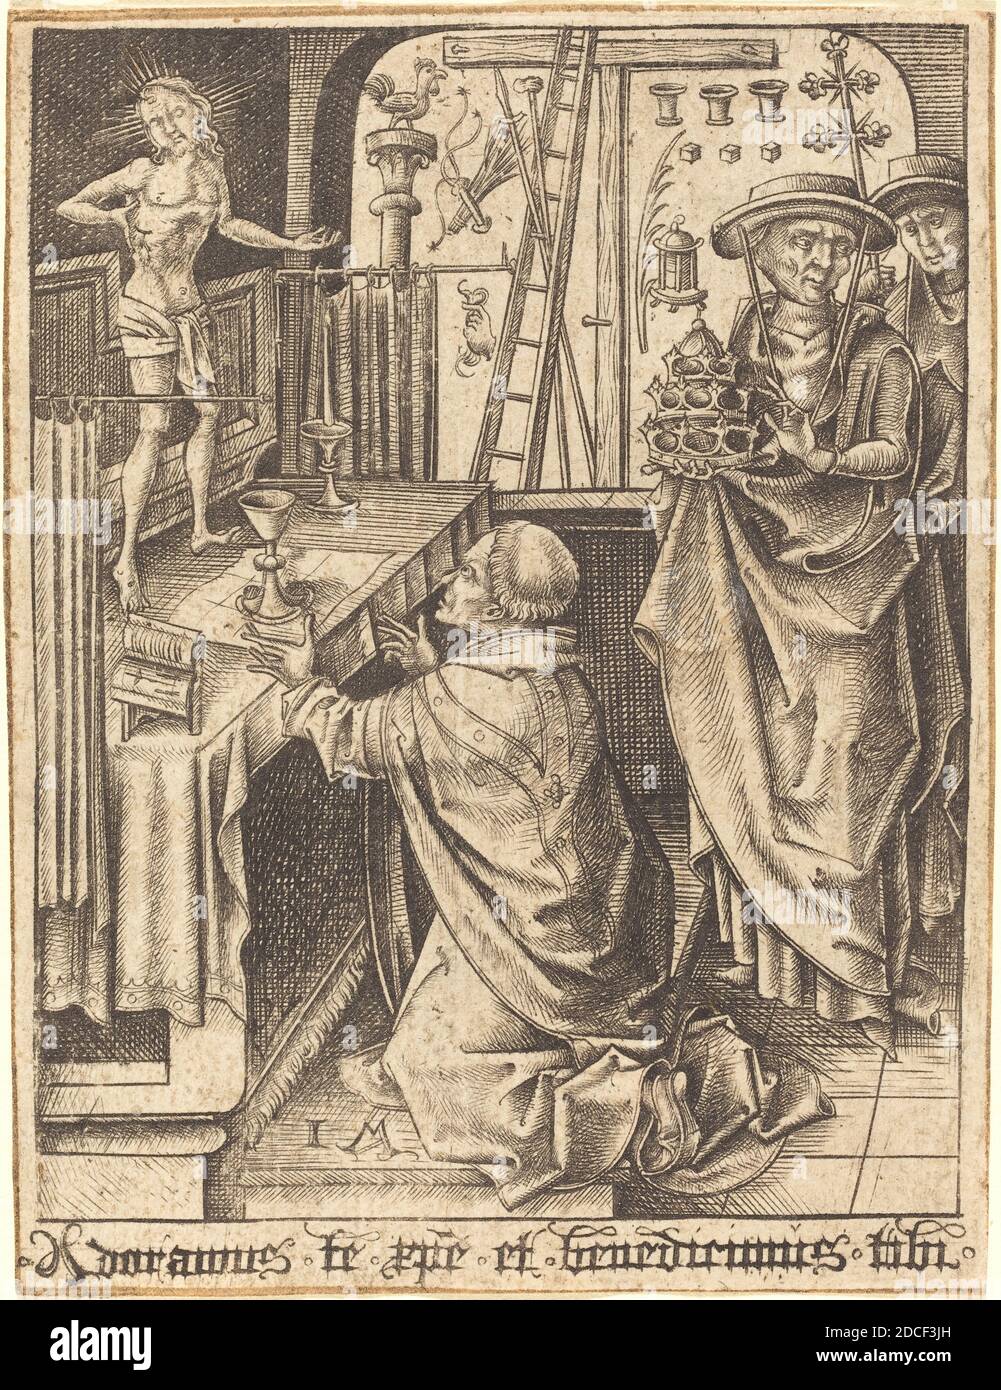 Israhel van Meckenem, (artist), German, c. 1445 - 1503, The Mass of Saint Gregory, c. 1480/1490, engraving Stock Photo